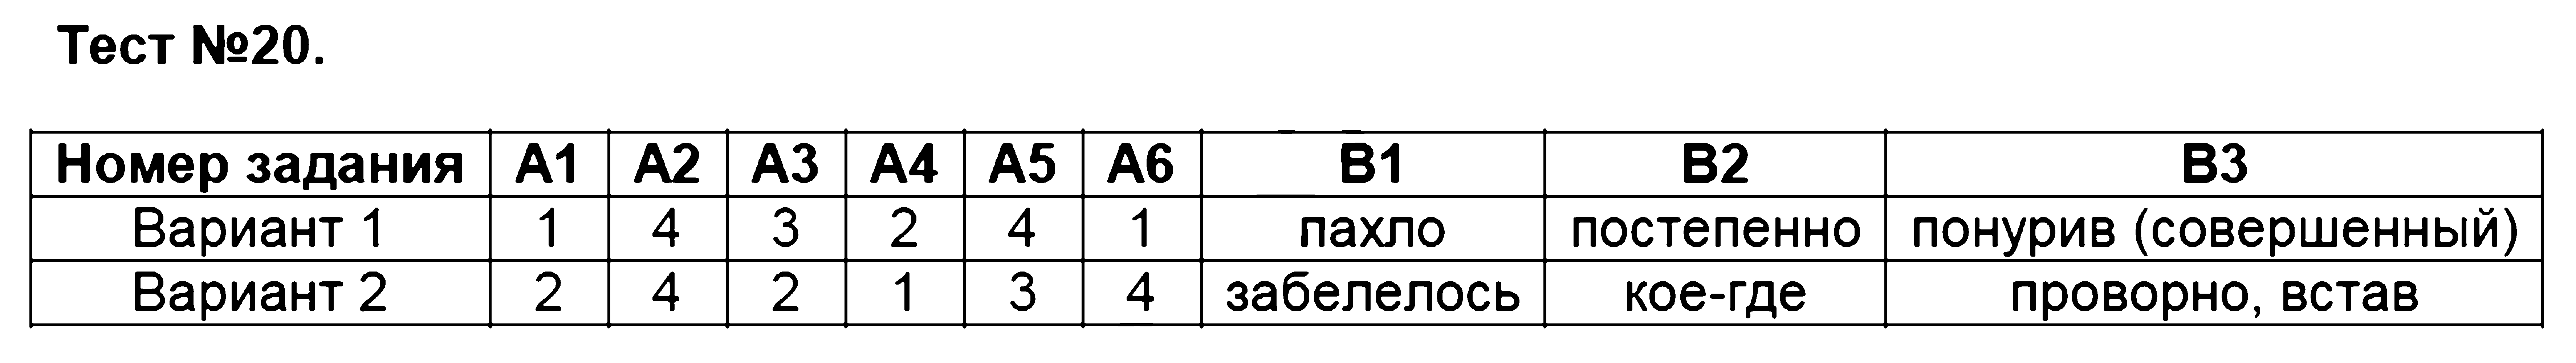 ГДЗ Русский язык 7 класс - Тест 20